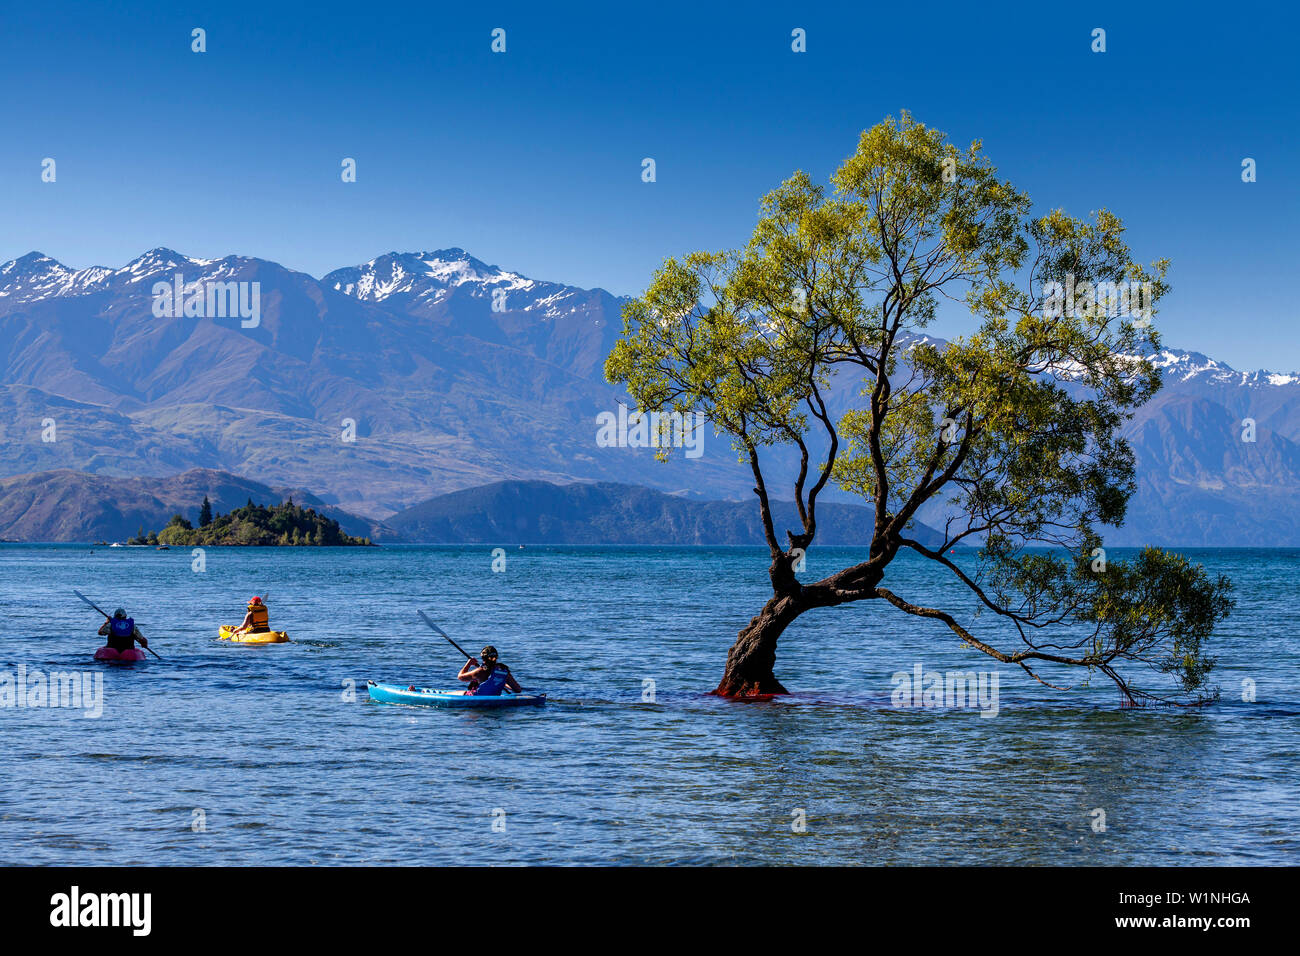 People Kayaking Around The Iconic ‘Lone Tree’ In The Lake, Lake Wanaka, Otago Region, South Island, New Zealand Stock Photo